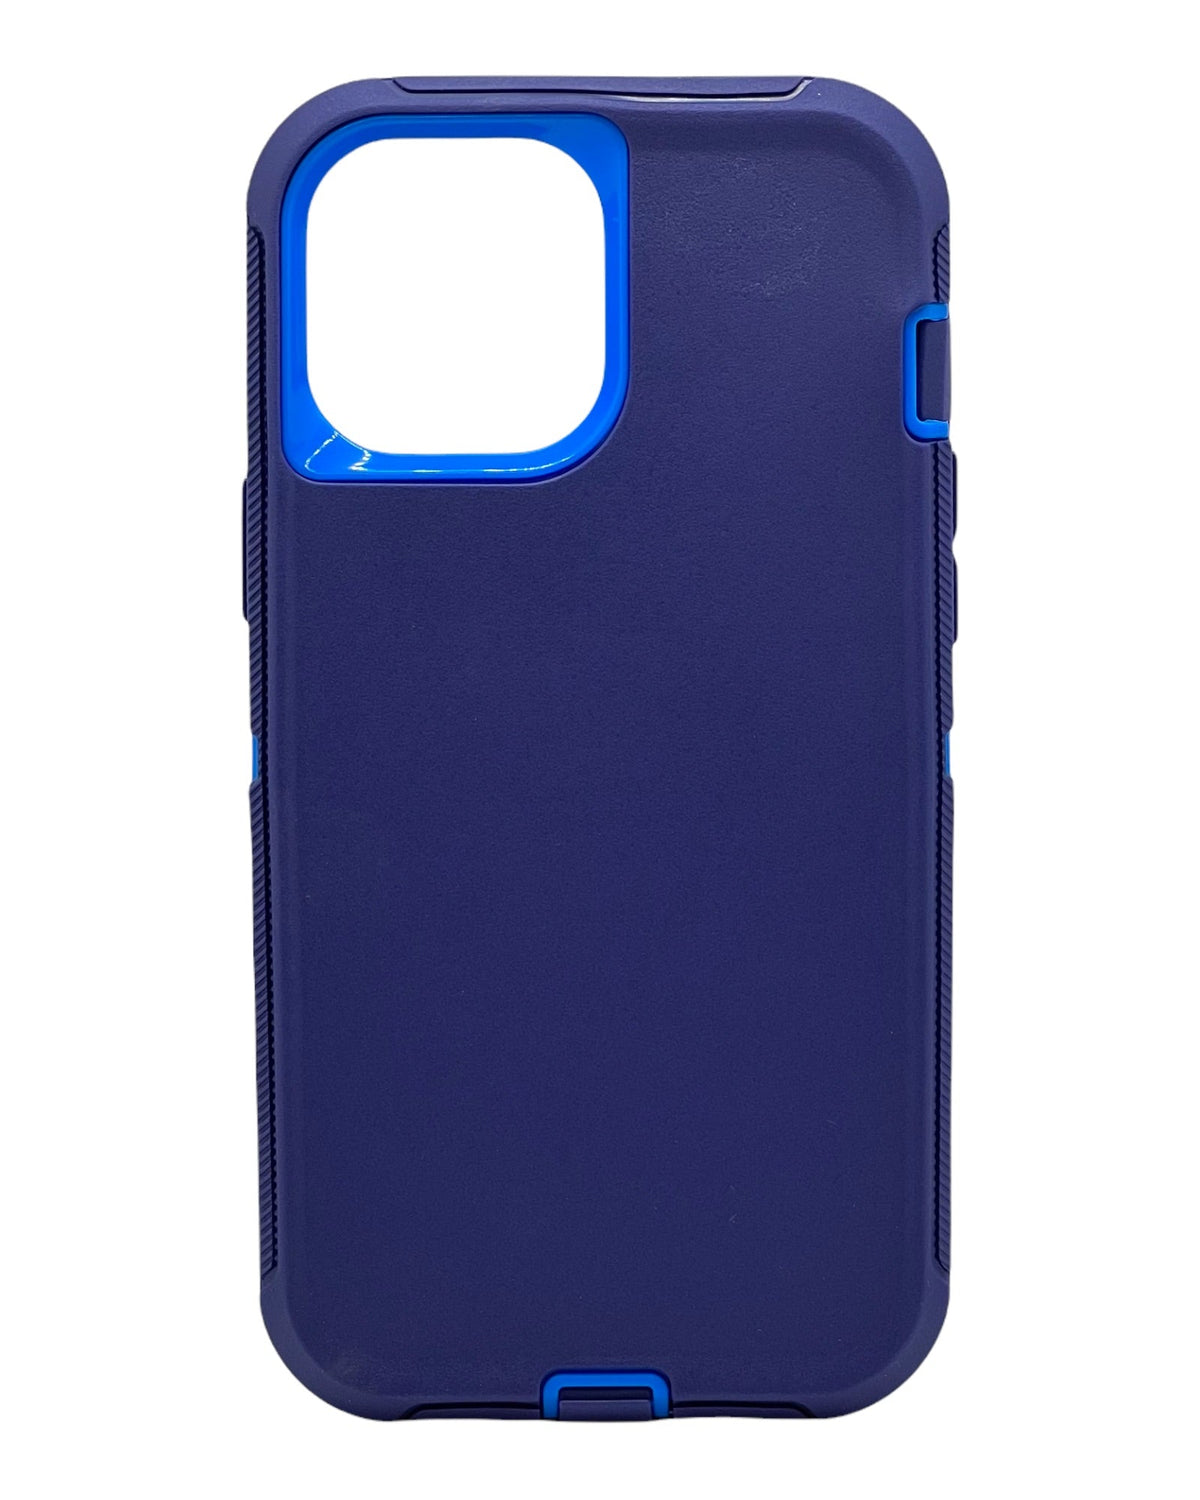 Heavy Duty Case - Blue iPhone 12